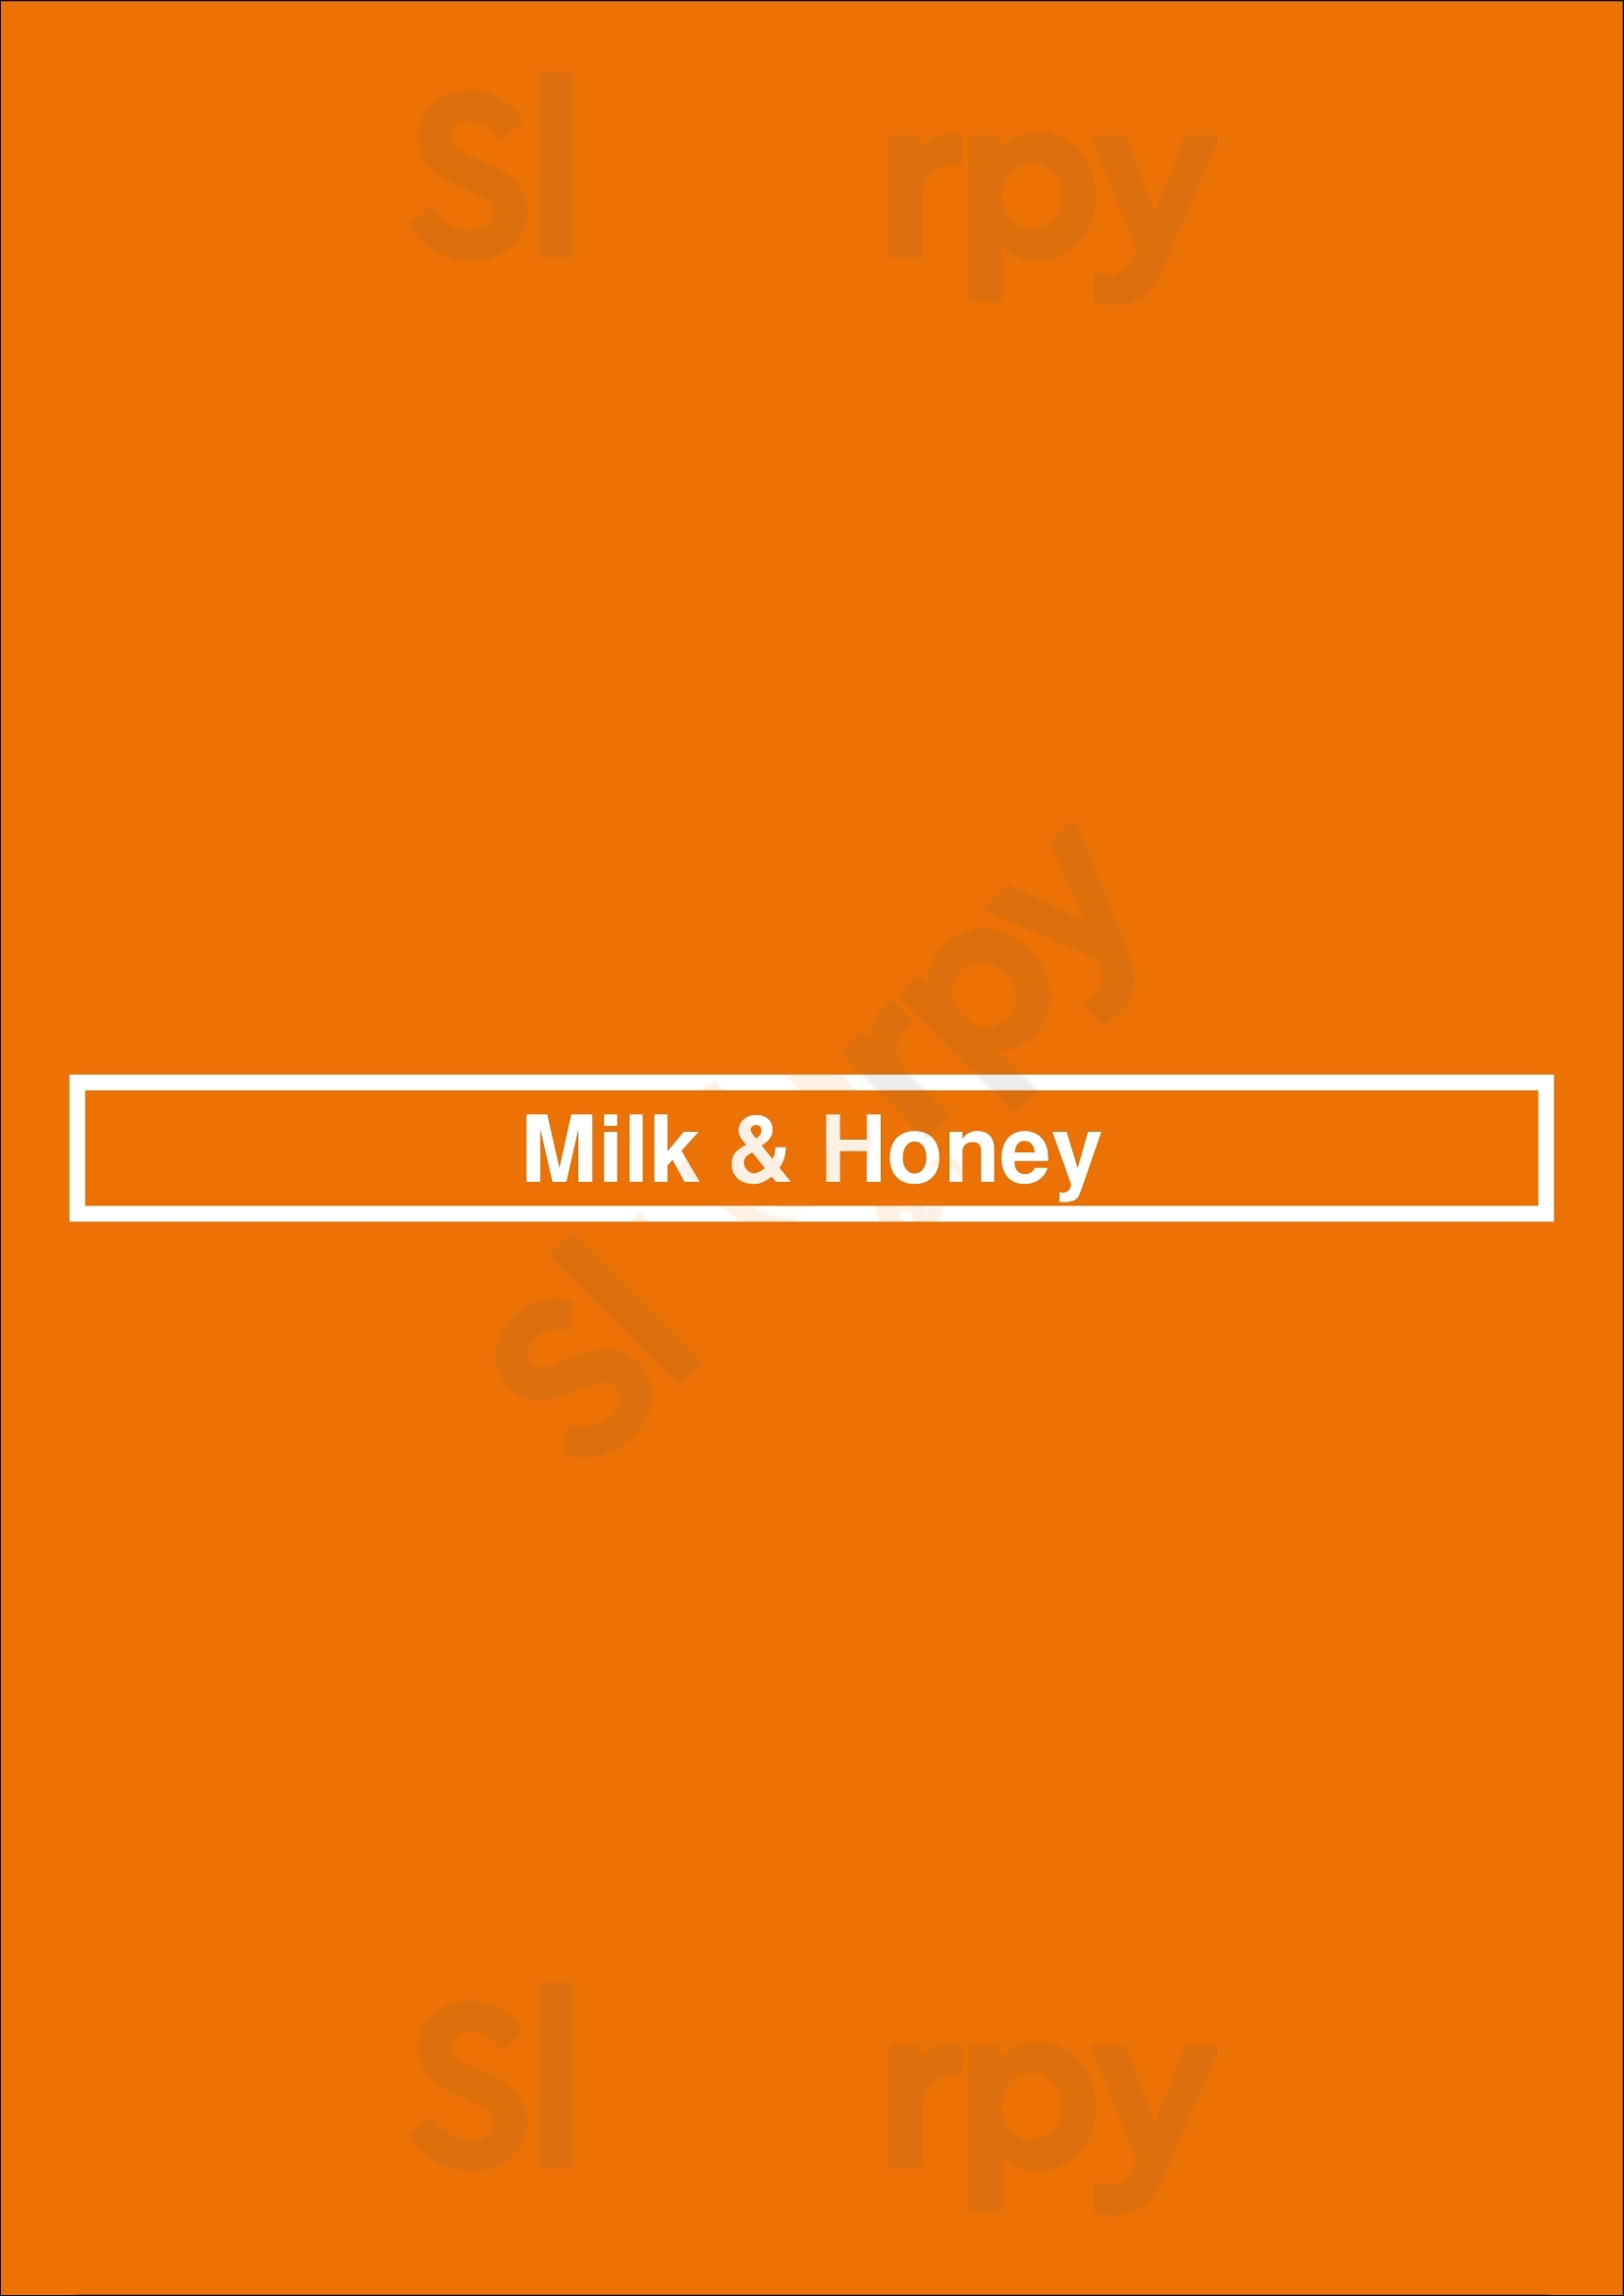 Milk & Honey Napier Menu - 1